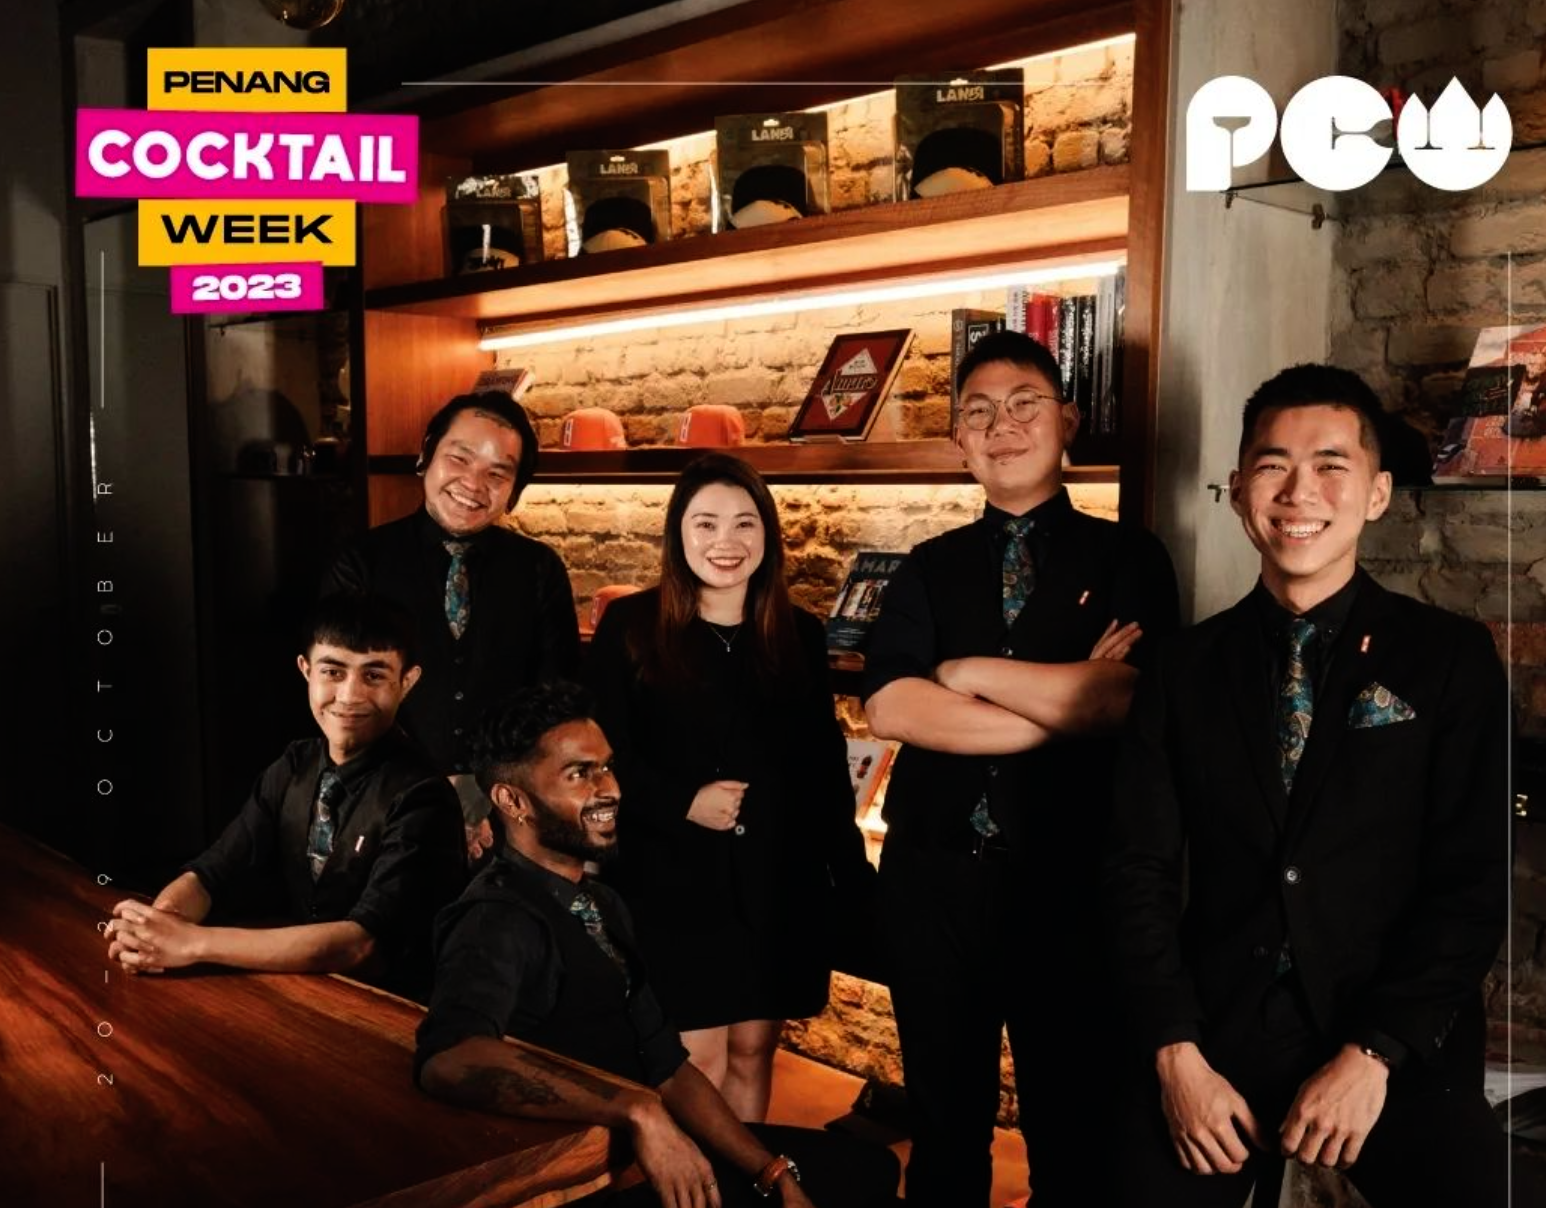 Penang Cocktail Week: A 10-Day celebration of mixology